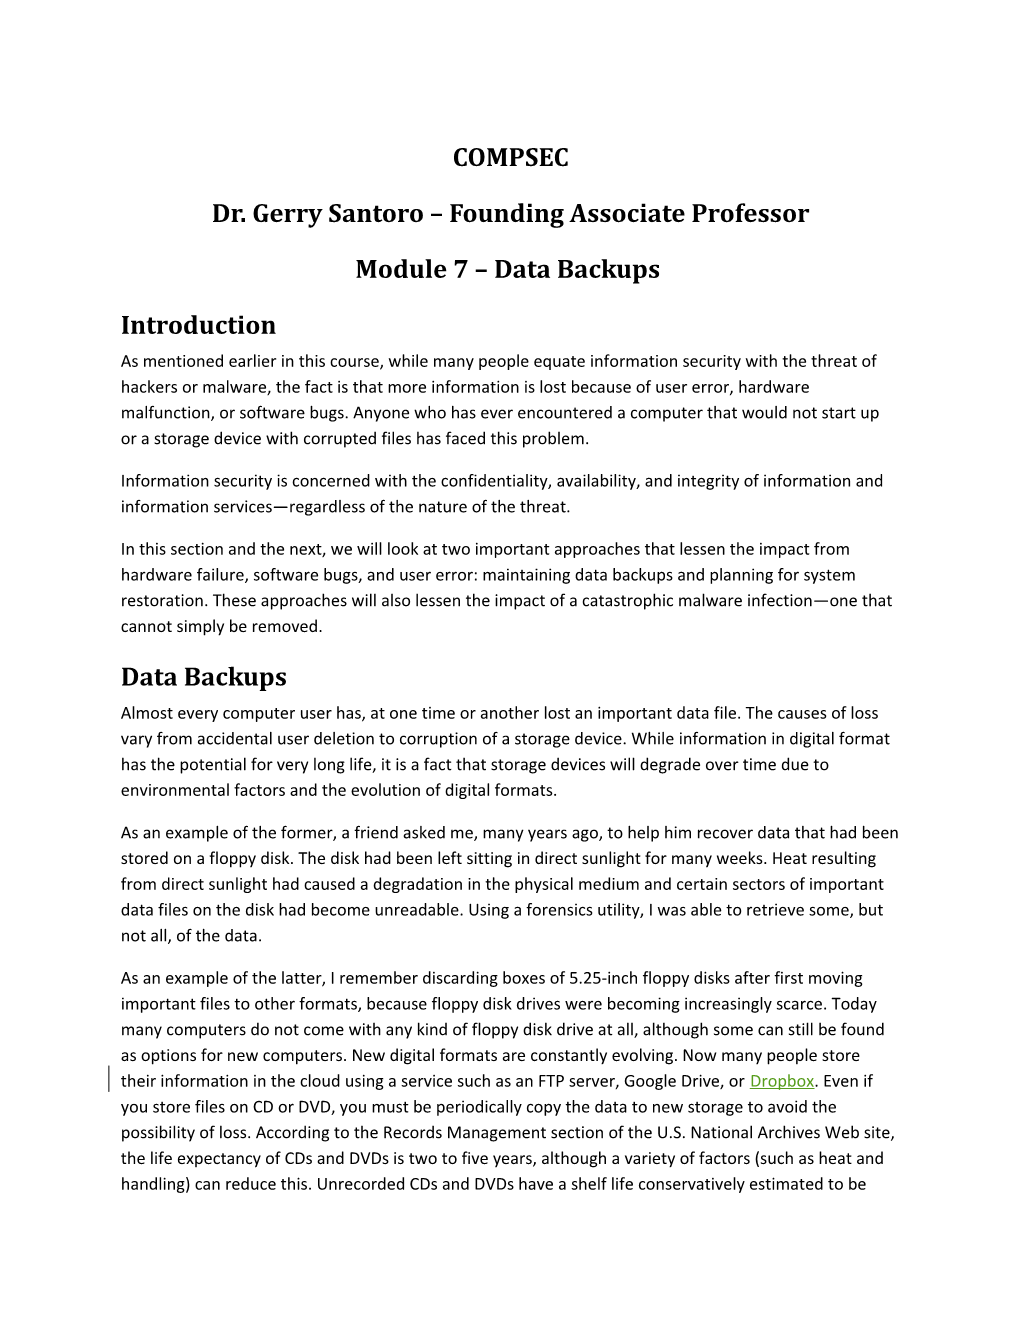 Dr. Gerry Santoro Founding Associate Professor